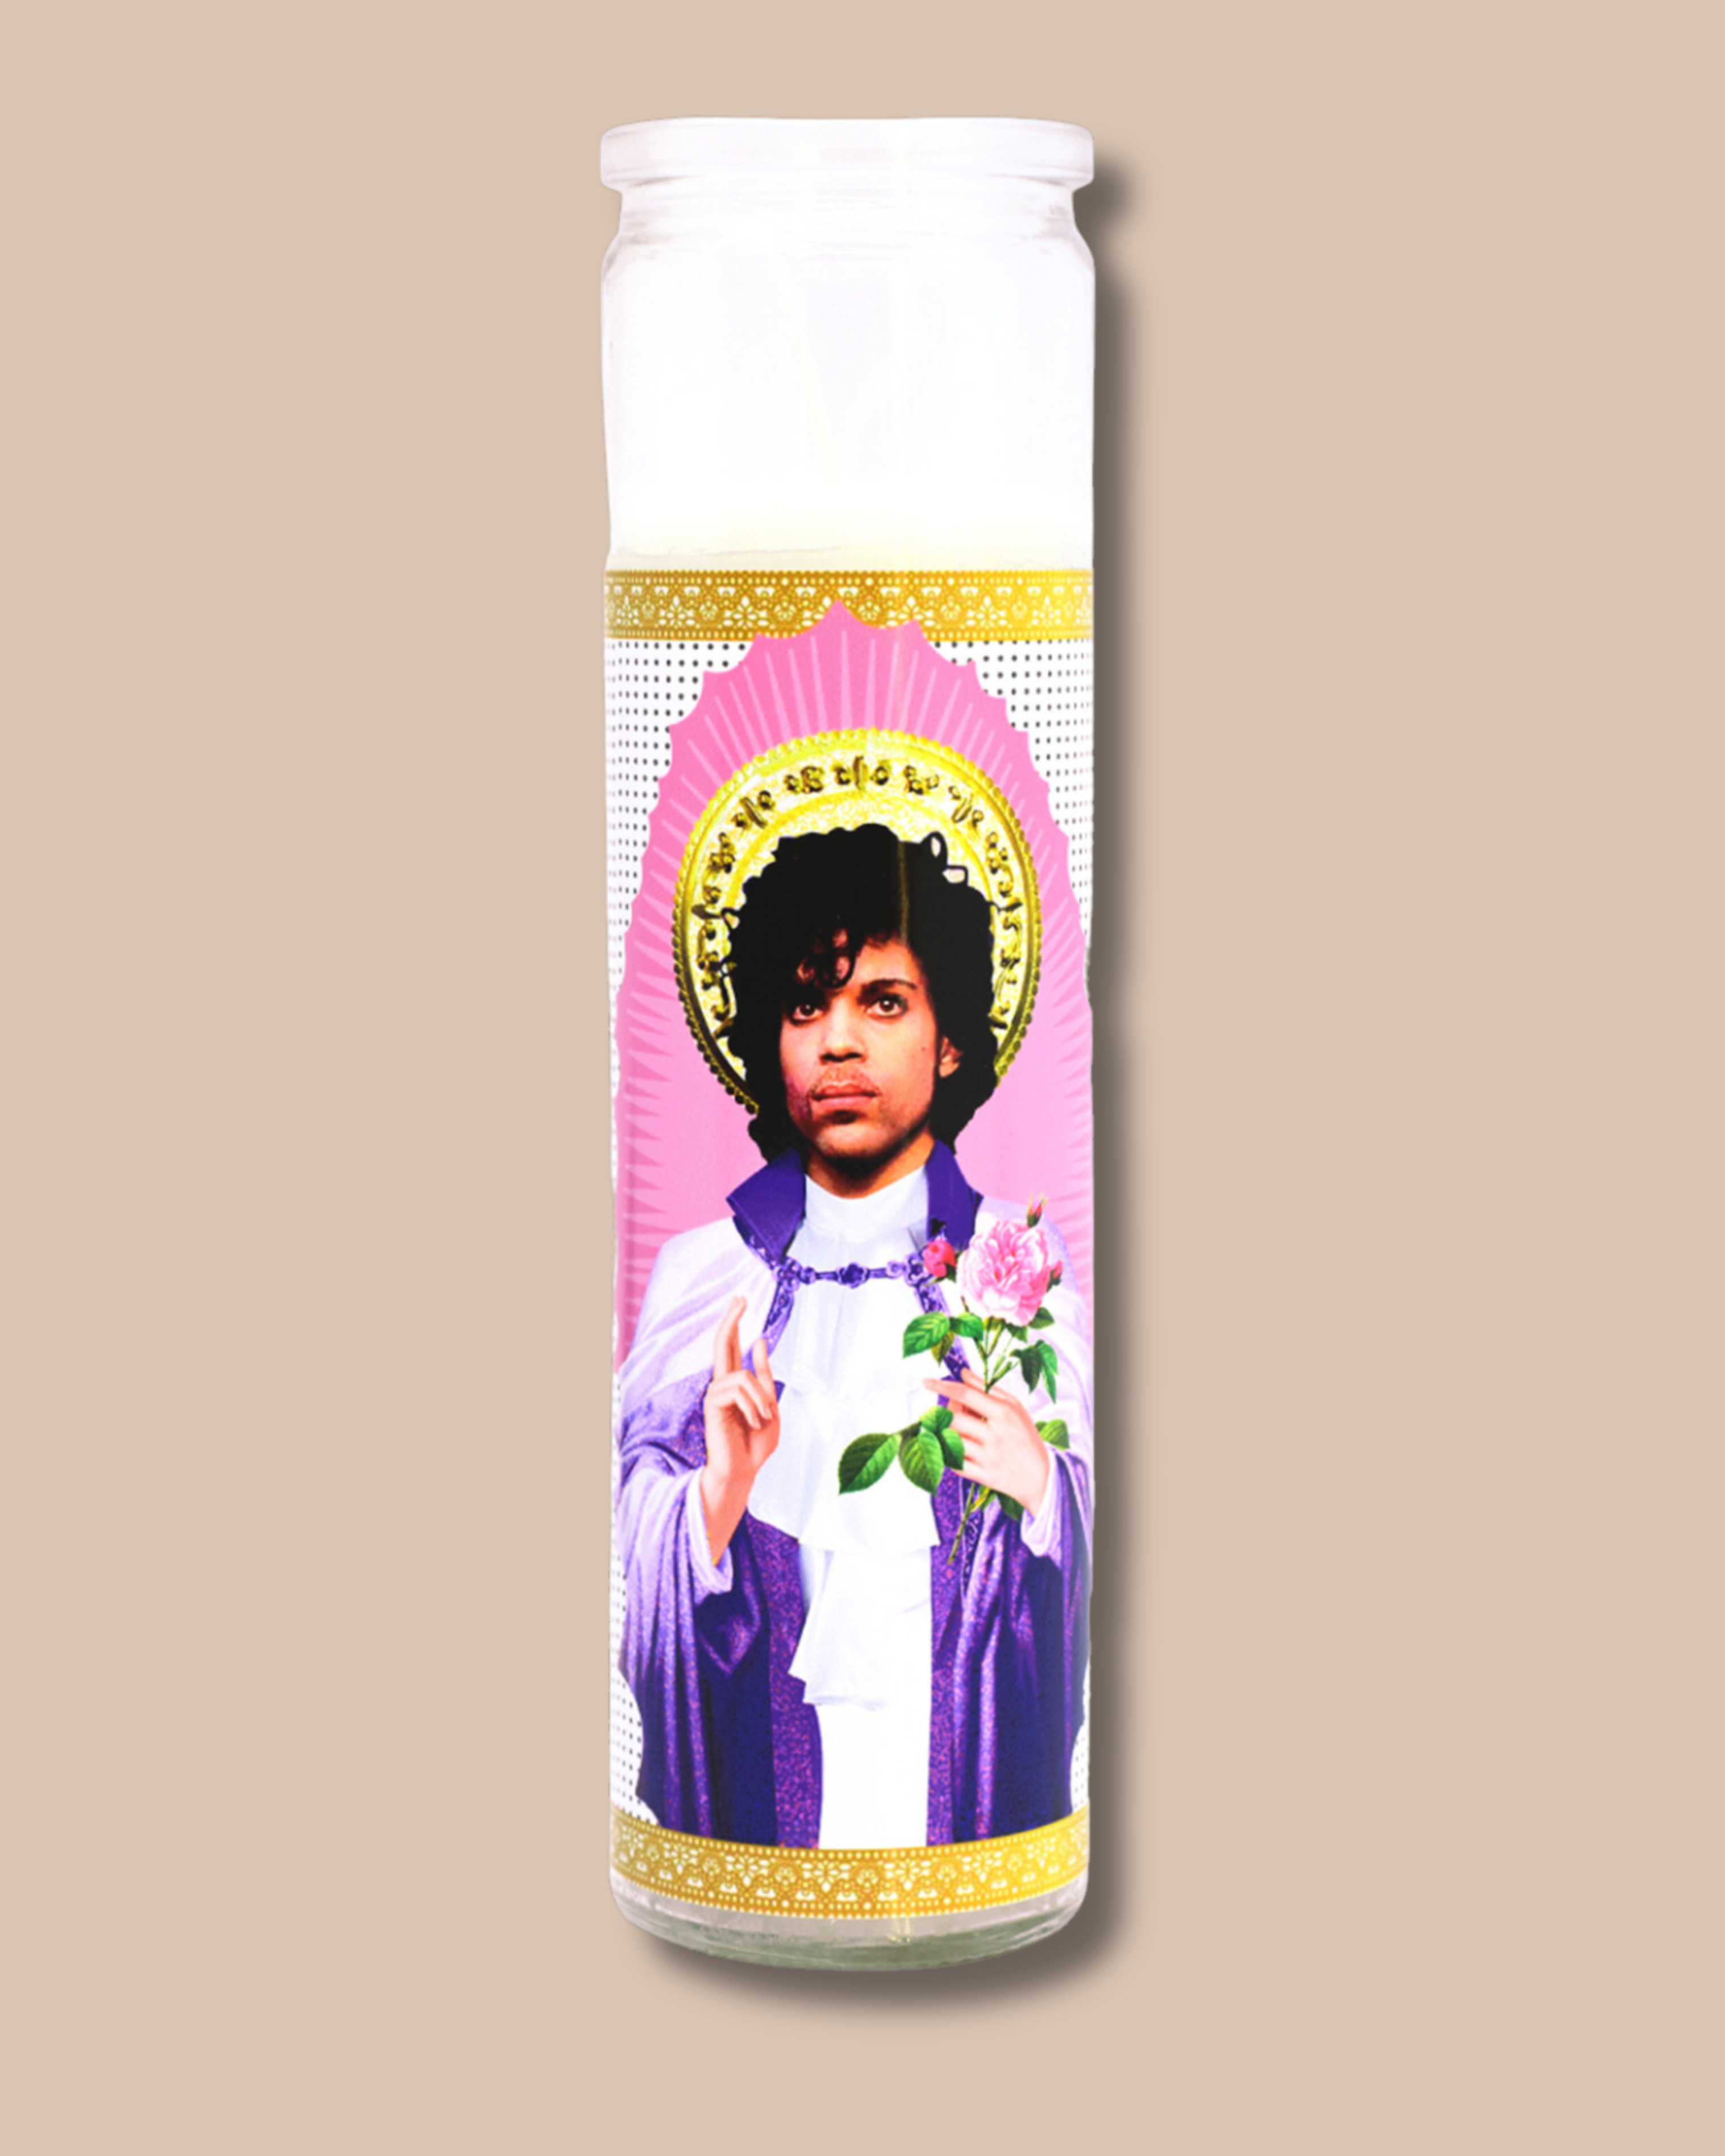 Prince Celebrity Prayer Candle